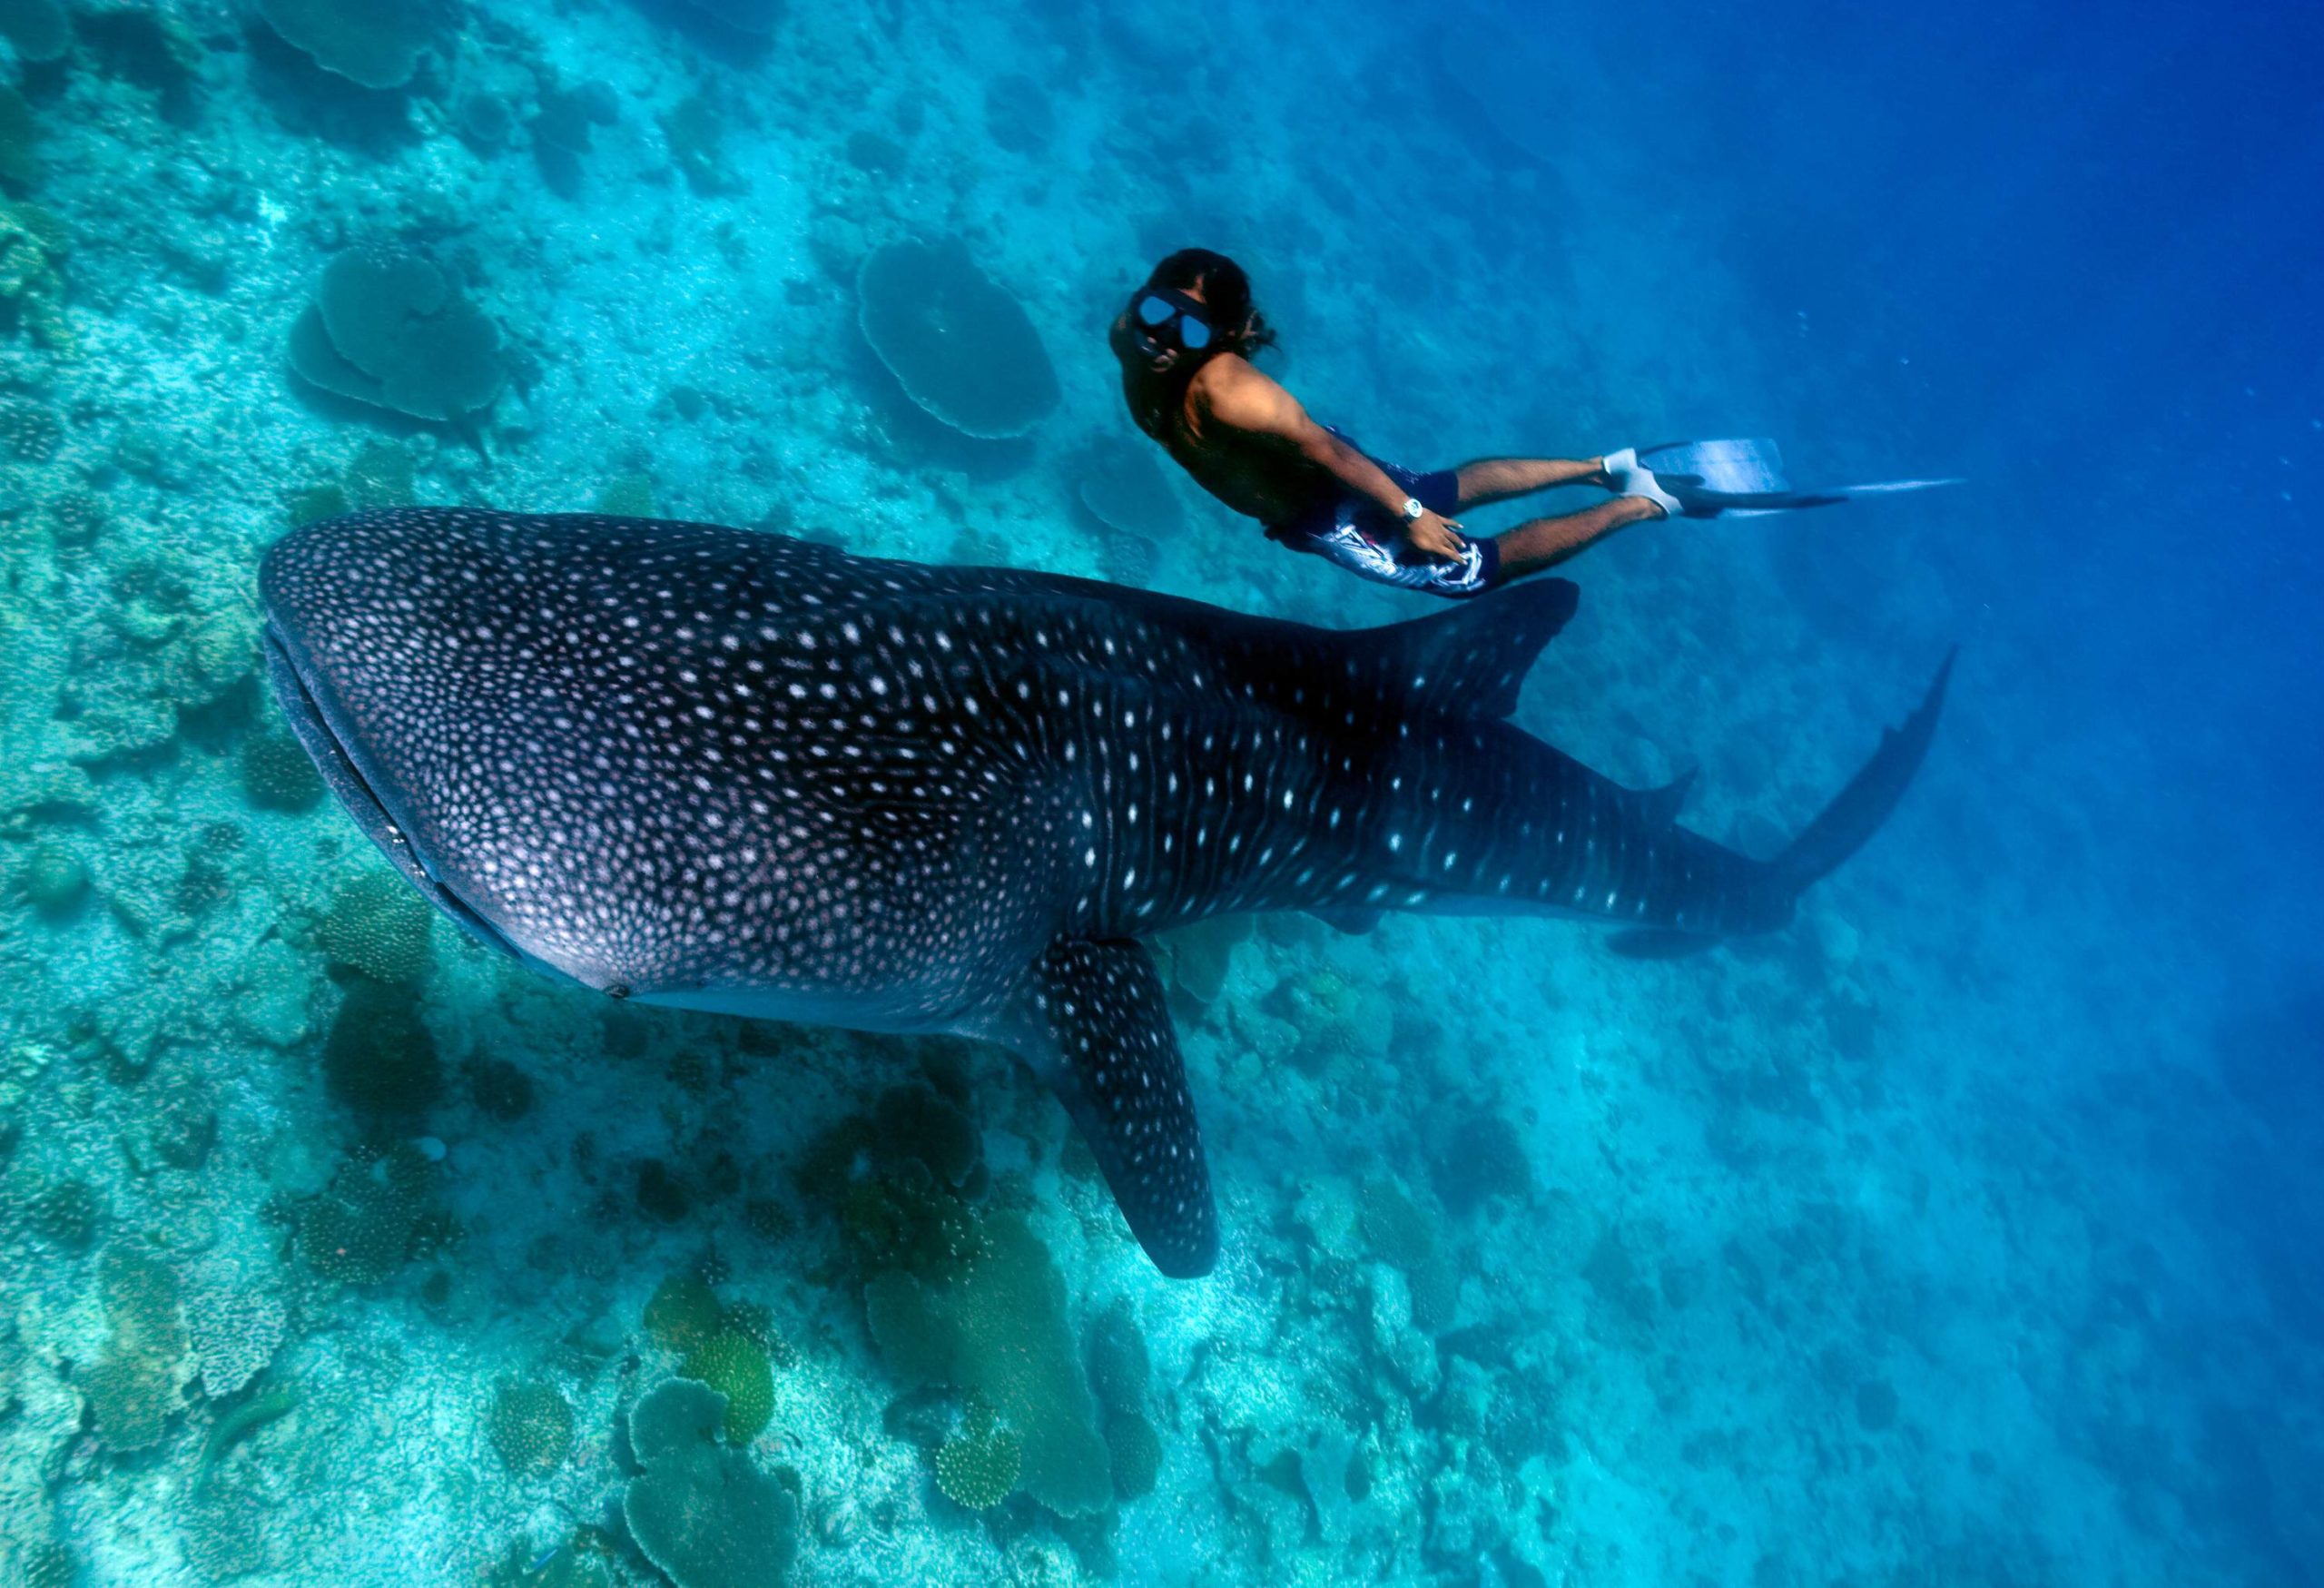 An awe-inspiring sight unfolds as a man gracefully swims alongside a majestic whale shark underwater.